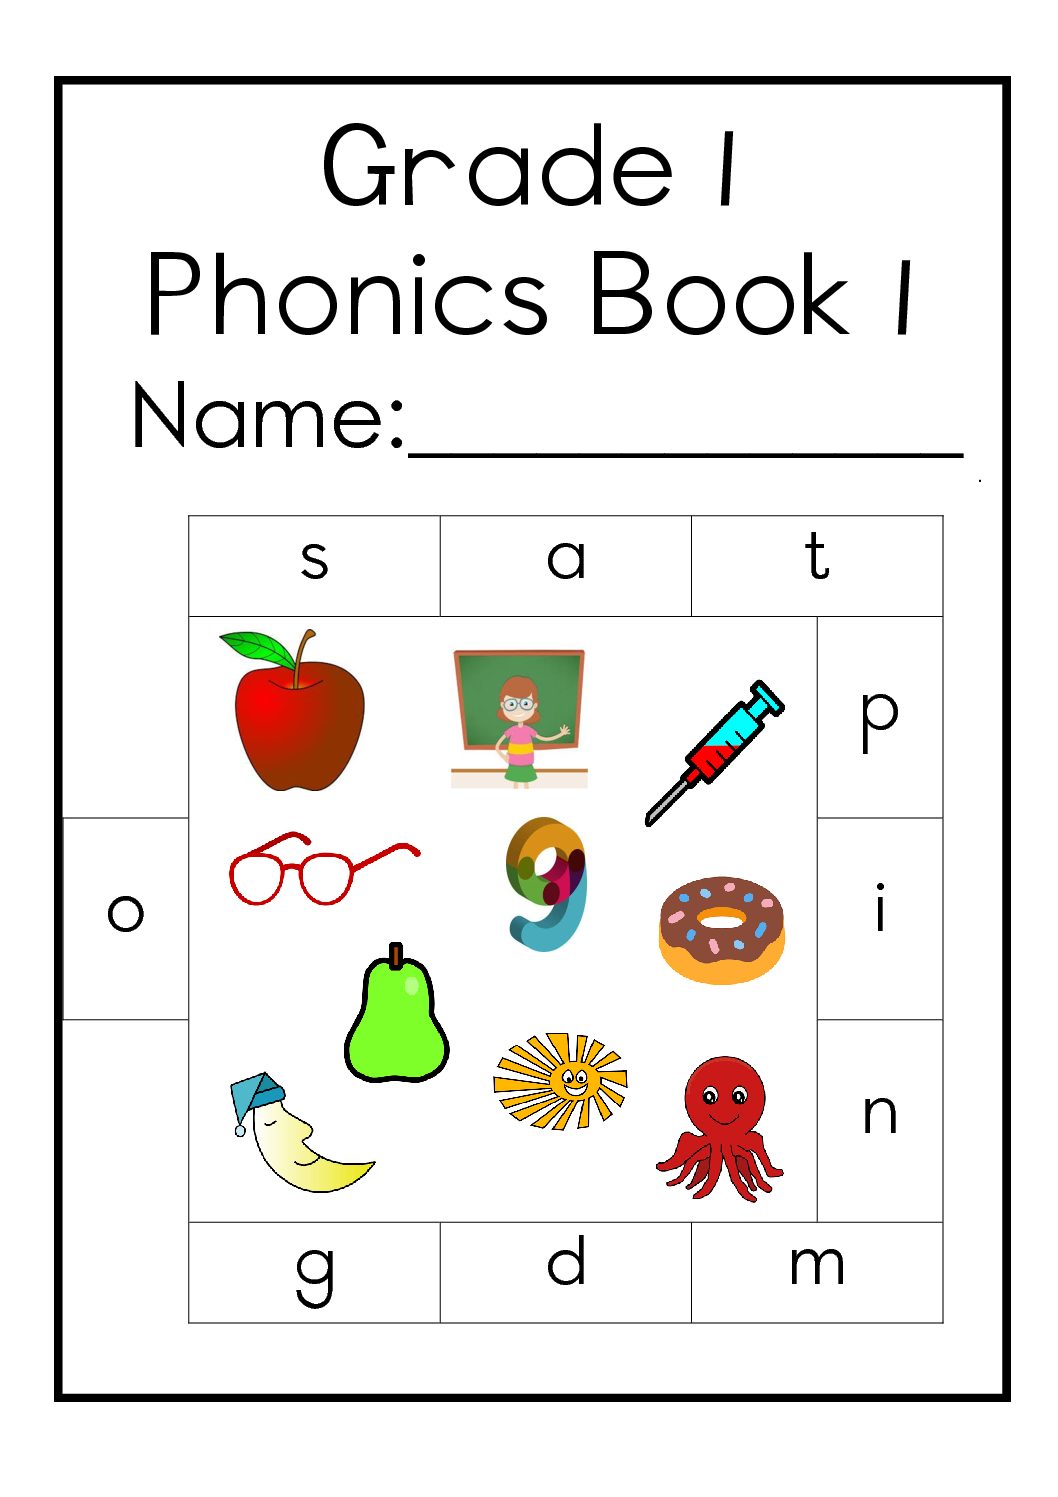 teach-child-how-to-read-grade-1-phonics-test-pdf